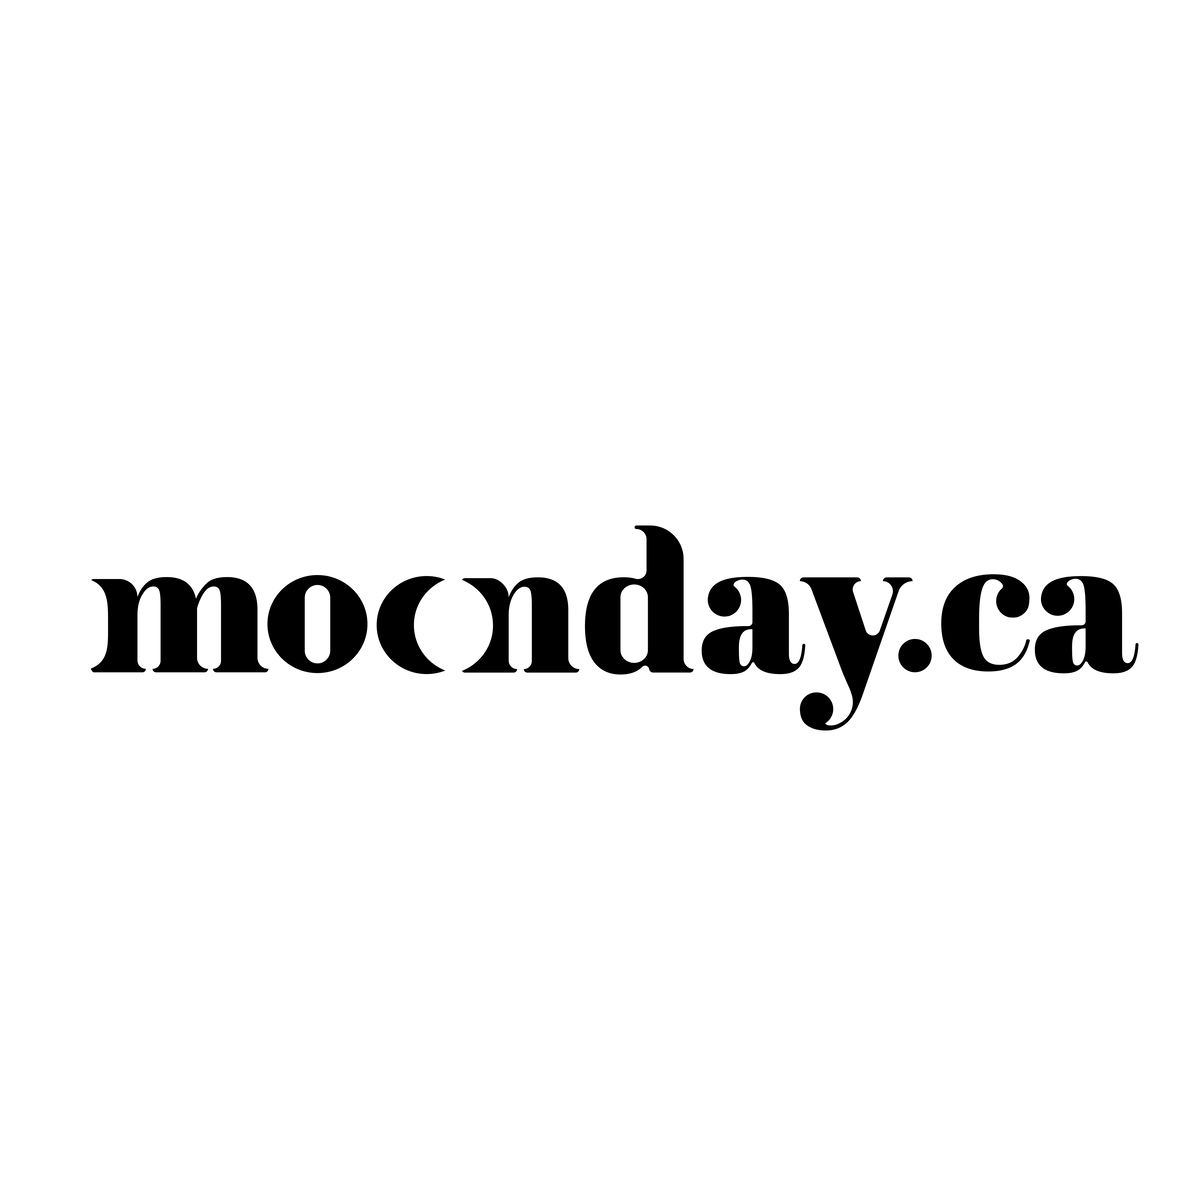 moonday-logo-1.png__PID:062f59d9-acd7-47e5-8980-a530e3af5a10